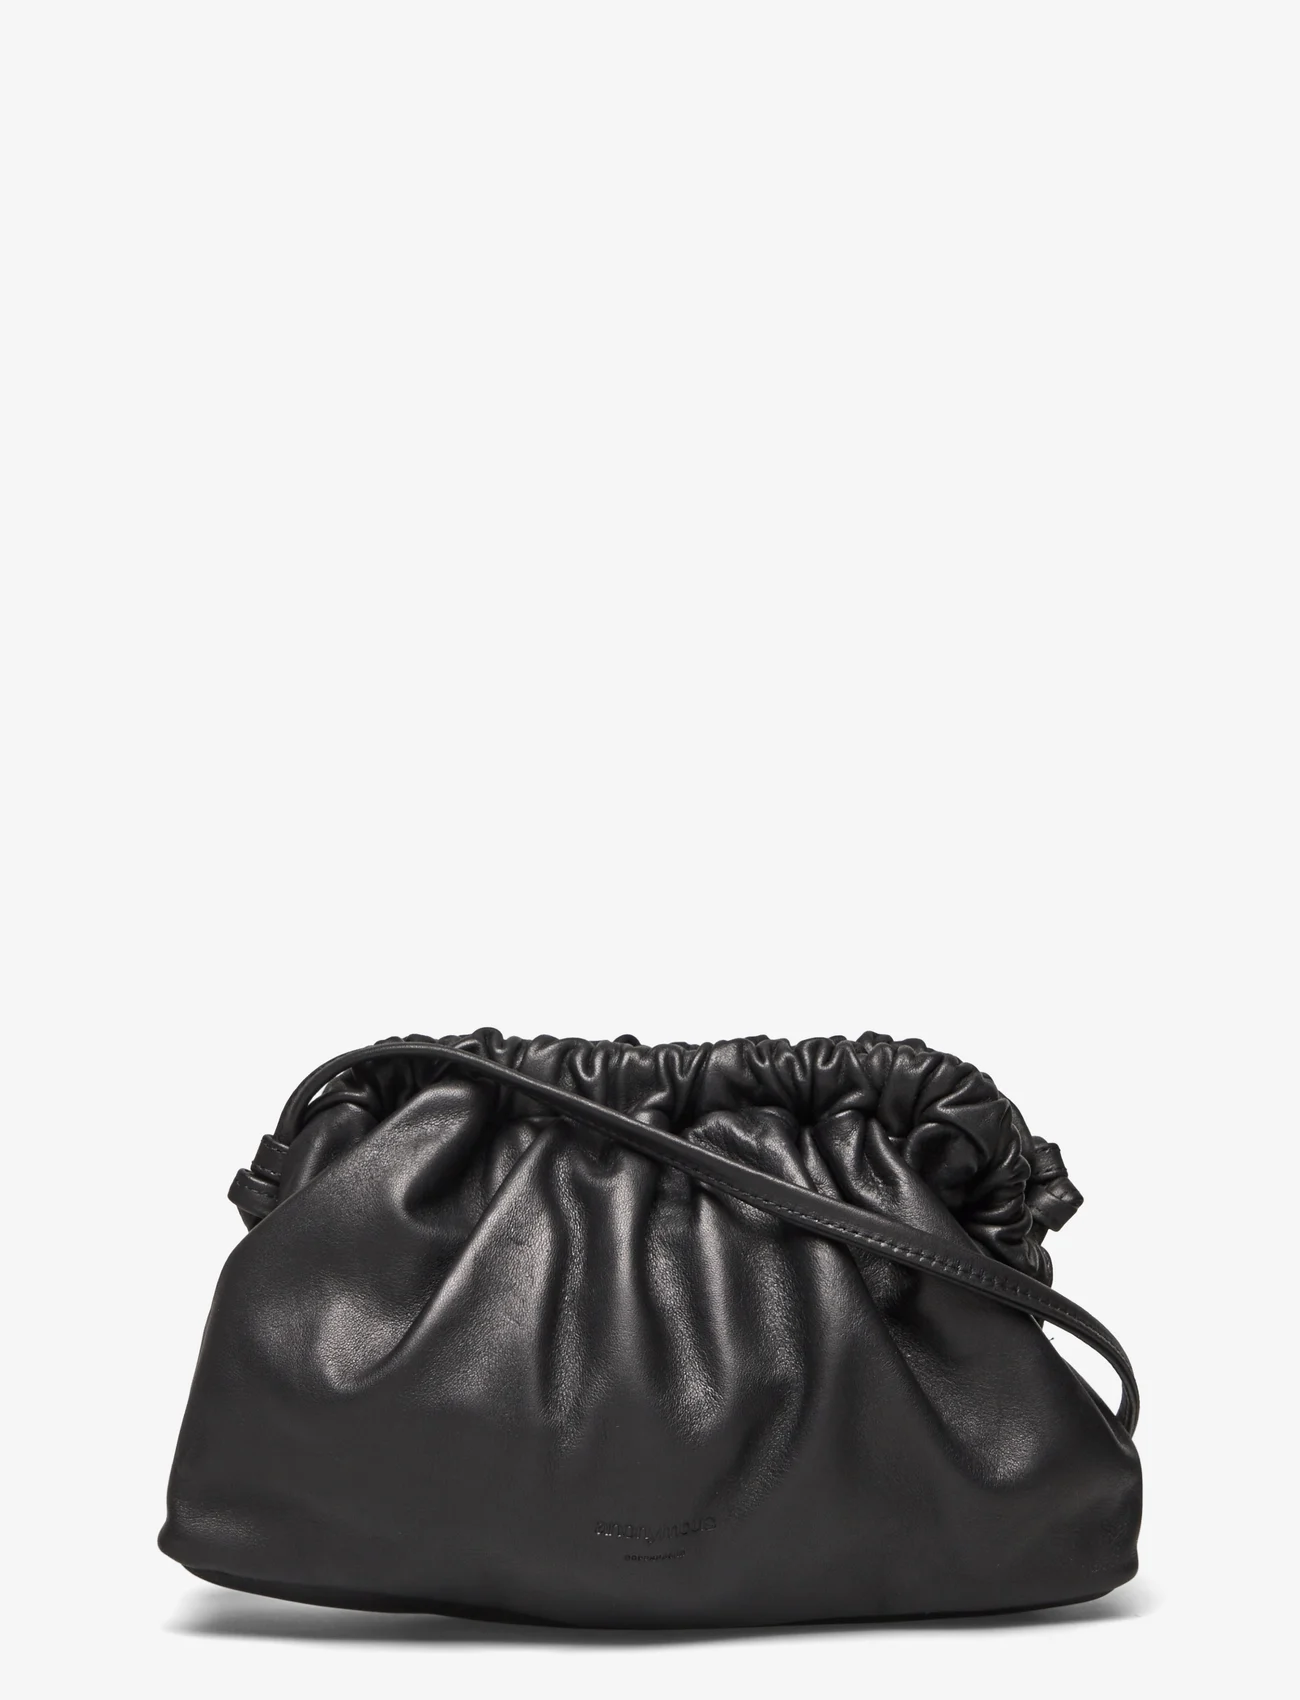 Anonymous Copenhagen - Hally petite cloud bag - festklær til outlet-priser - soft calf black - 0